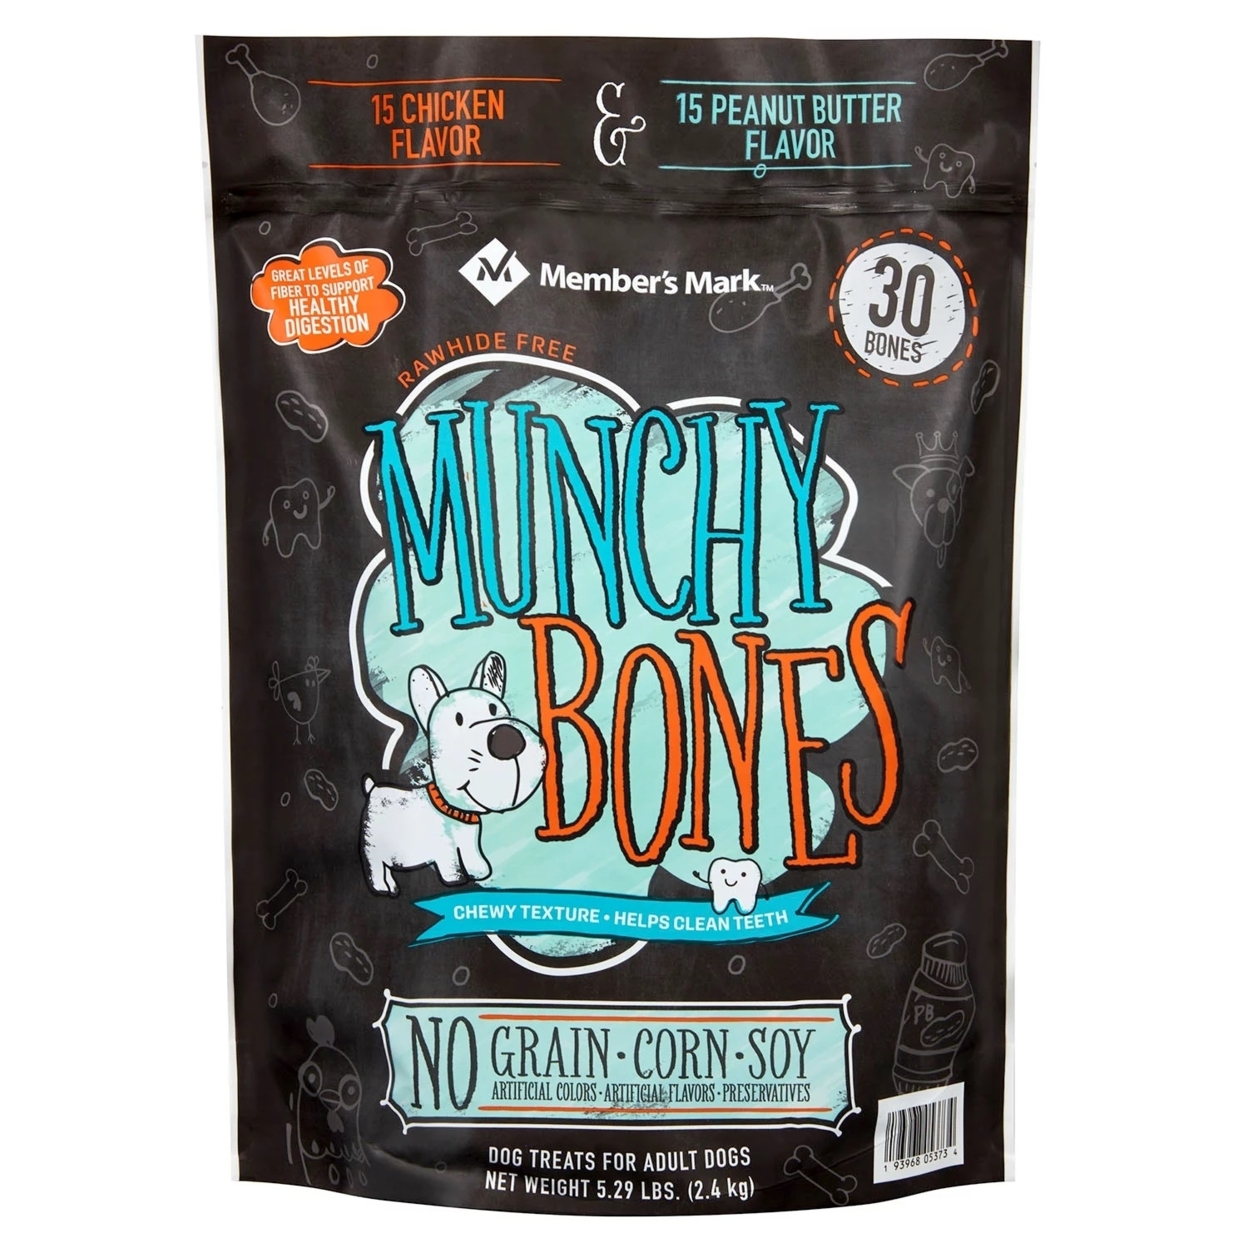 Member's Mark Munchy Bones Dog Treats For Adult Dogs, 30 Bones (5.29 Pound)